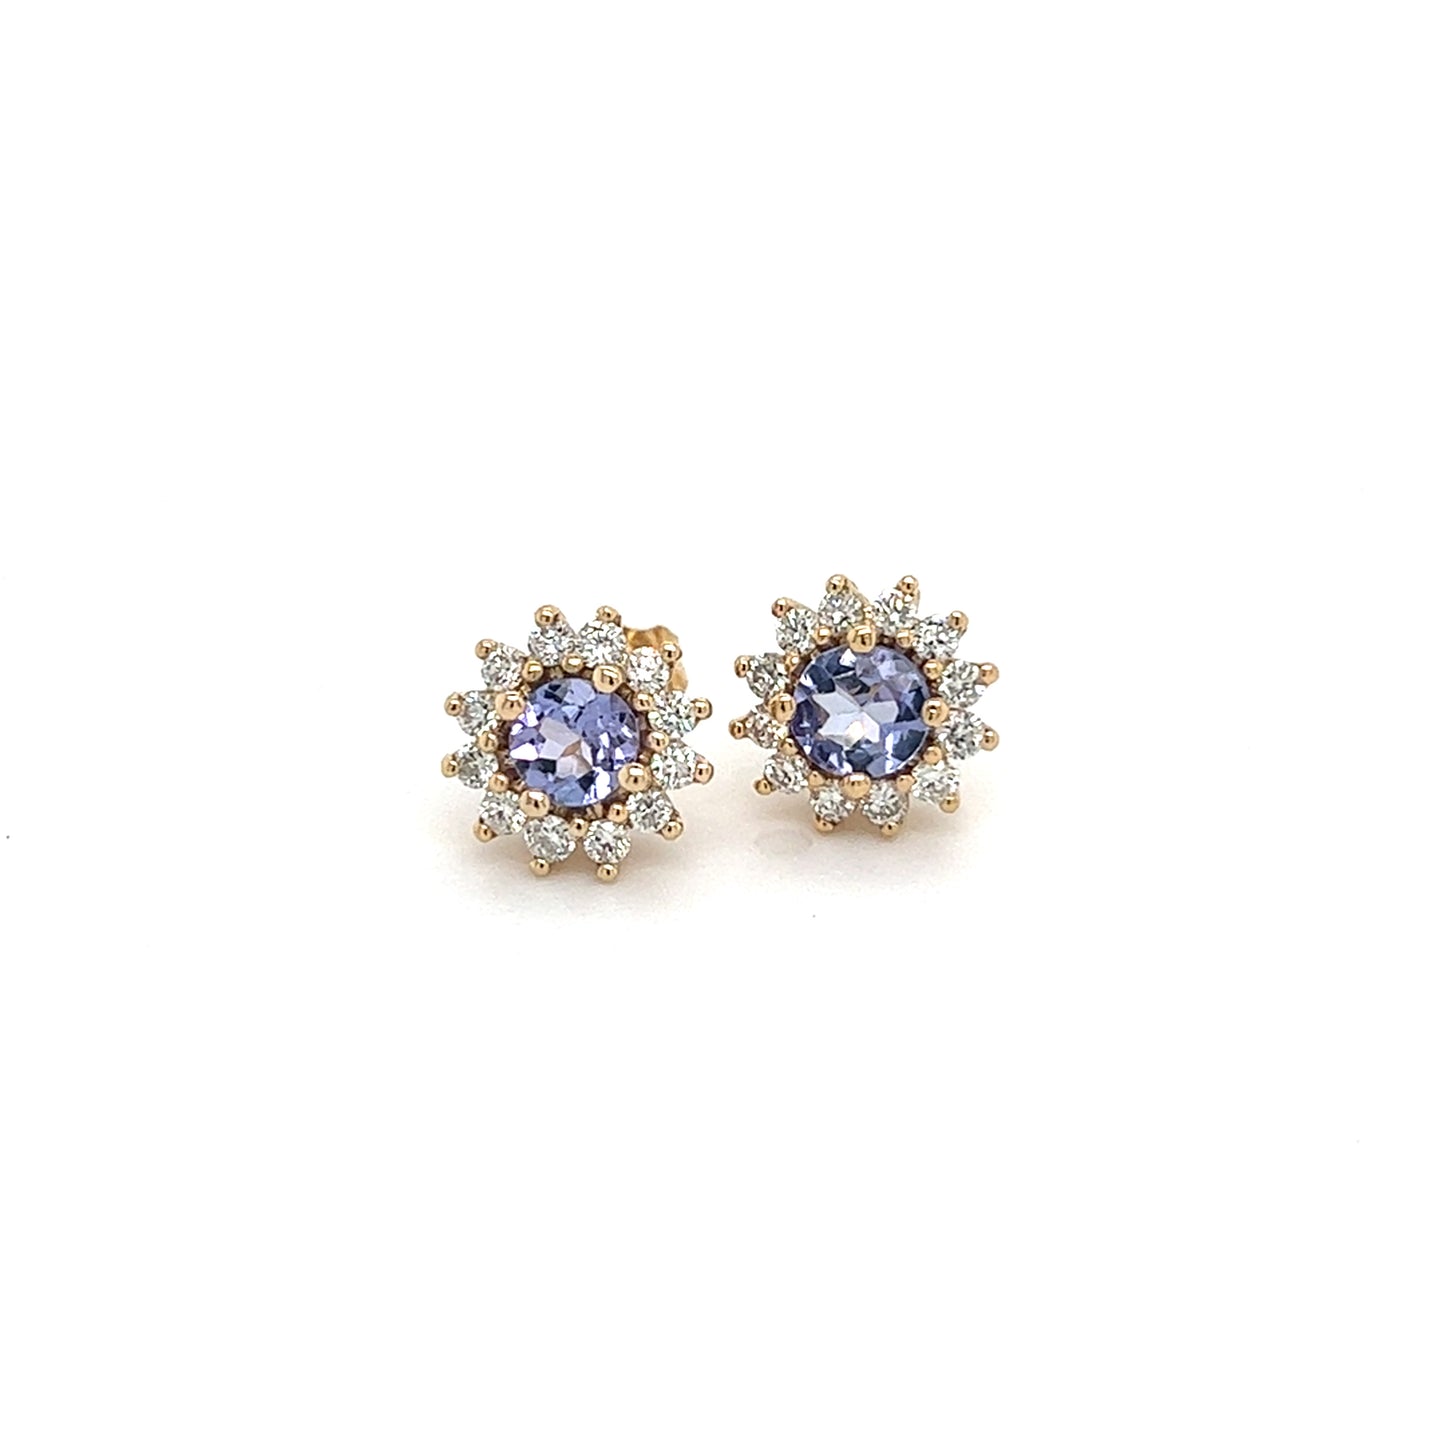 Natural Tanzanite Diamond Stud Earrings 14k Y Gold 1.18 TCW Certified $3,790 211353 - Certified Estate Jewelry